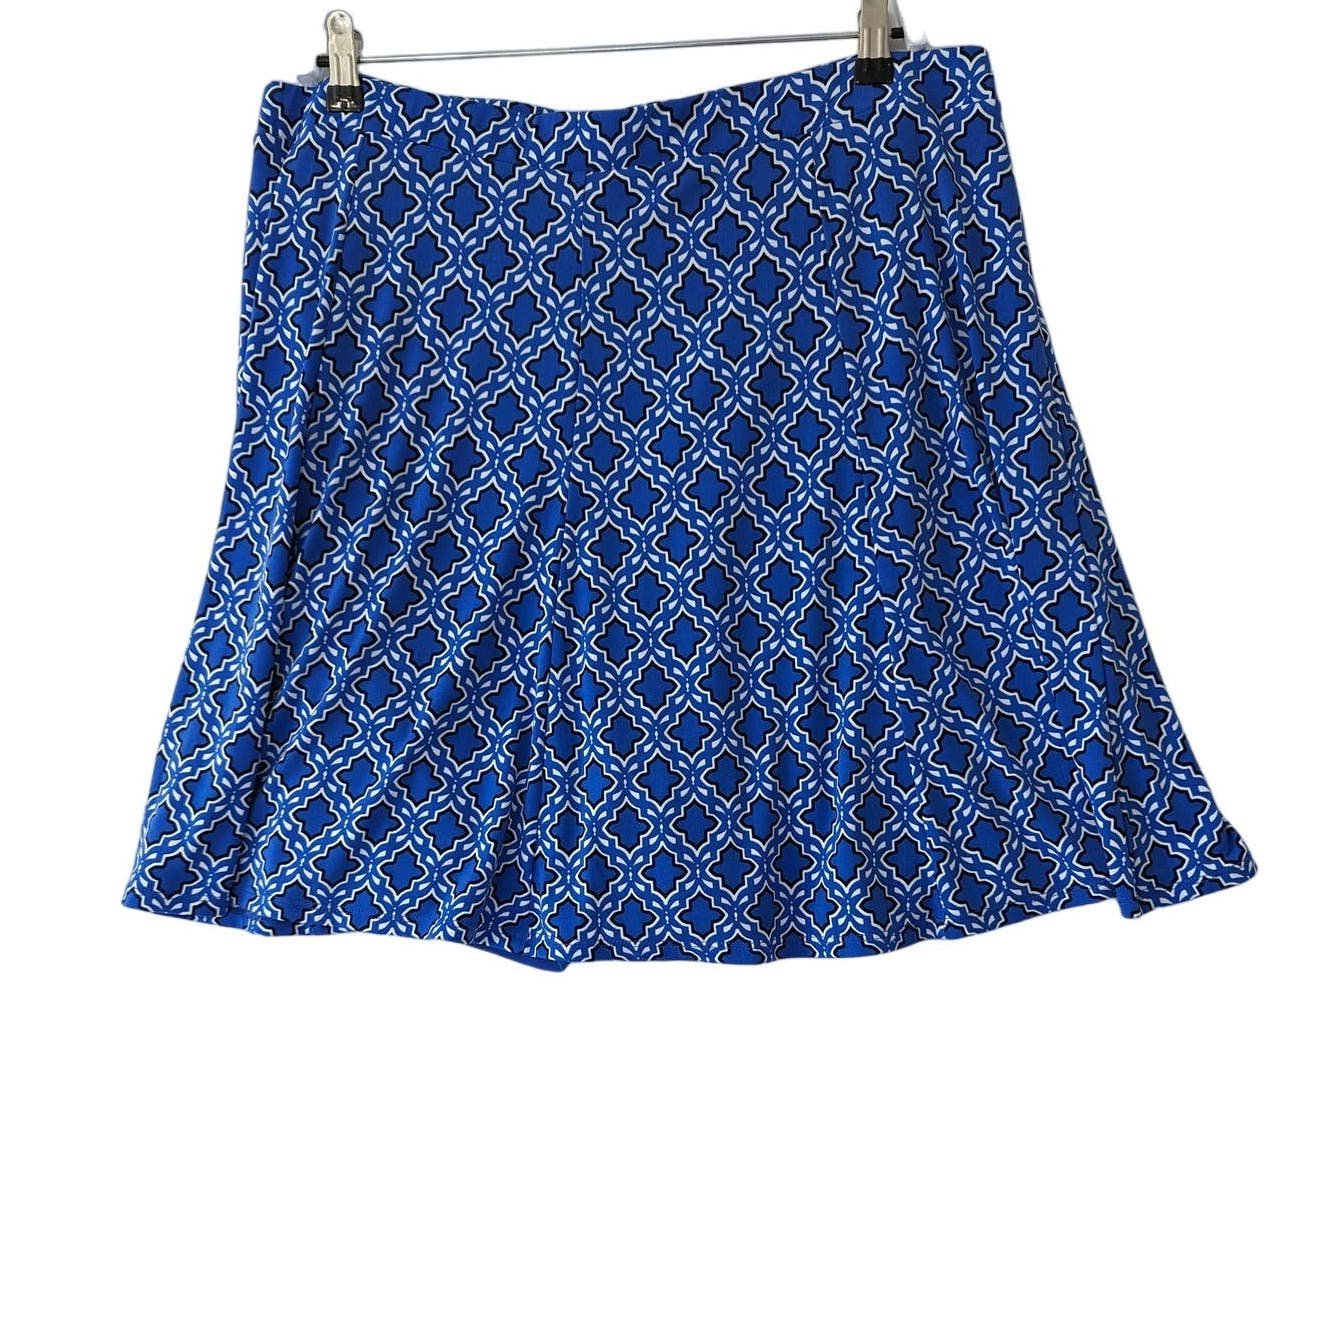 Special offer  Susan Graver Printed Liquid Knit Skort Womens Plus Sz 2X Blue Geometric Pull-on jxD8GOej2 Online Shop